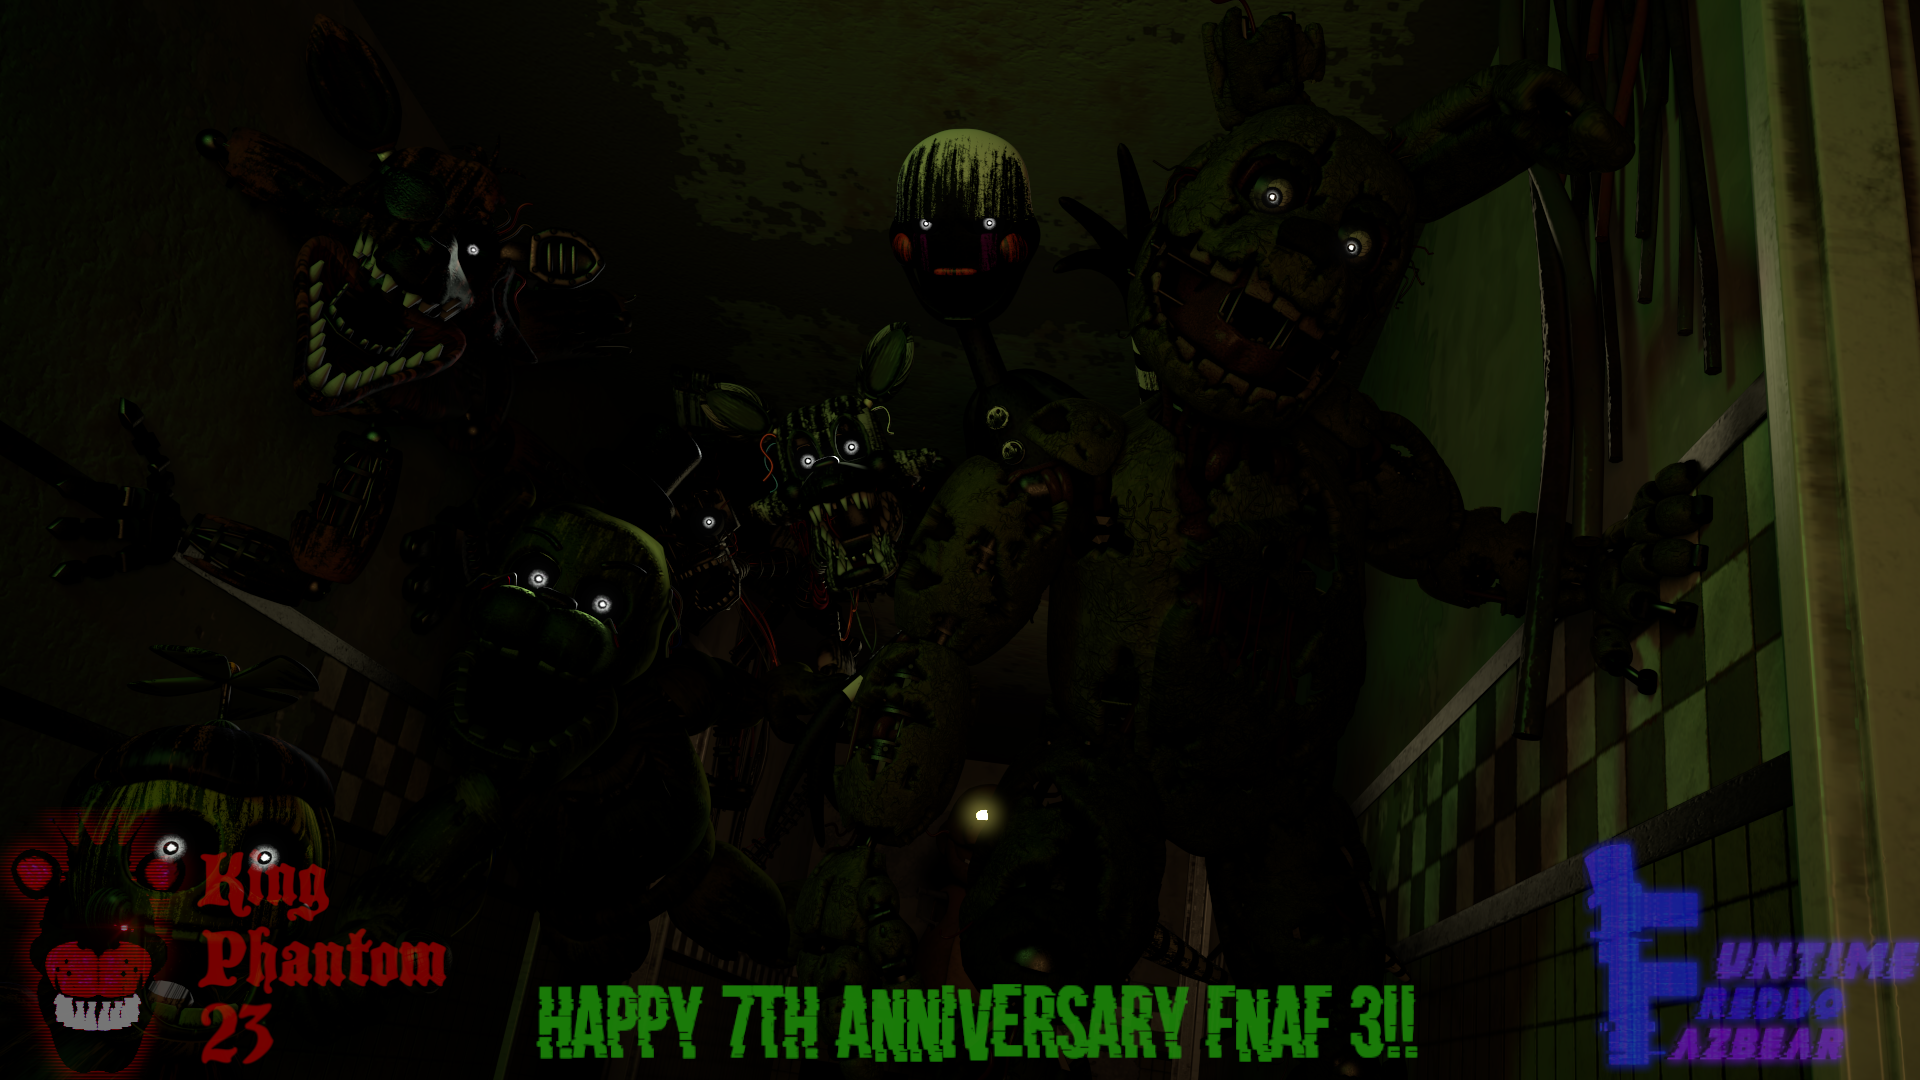 FNaF 3 7th Anniversary by FuntimeFreddoFazbear on DeviantArt